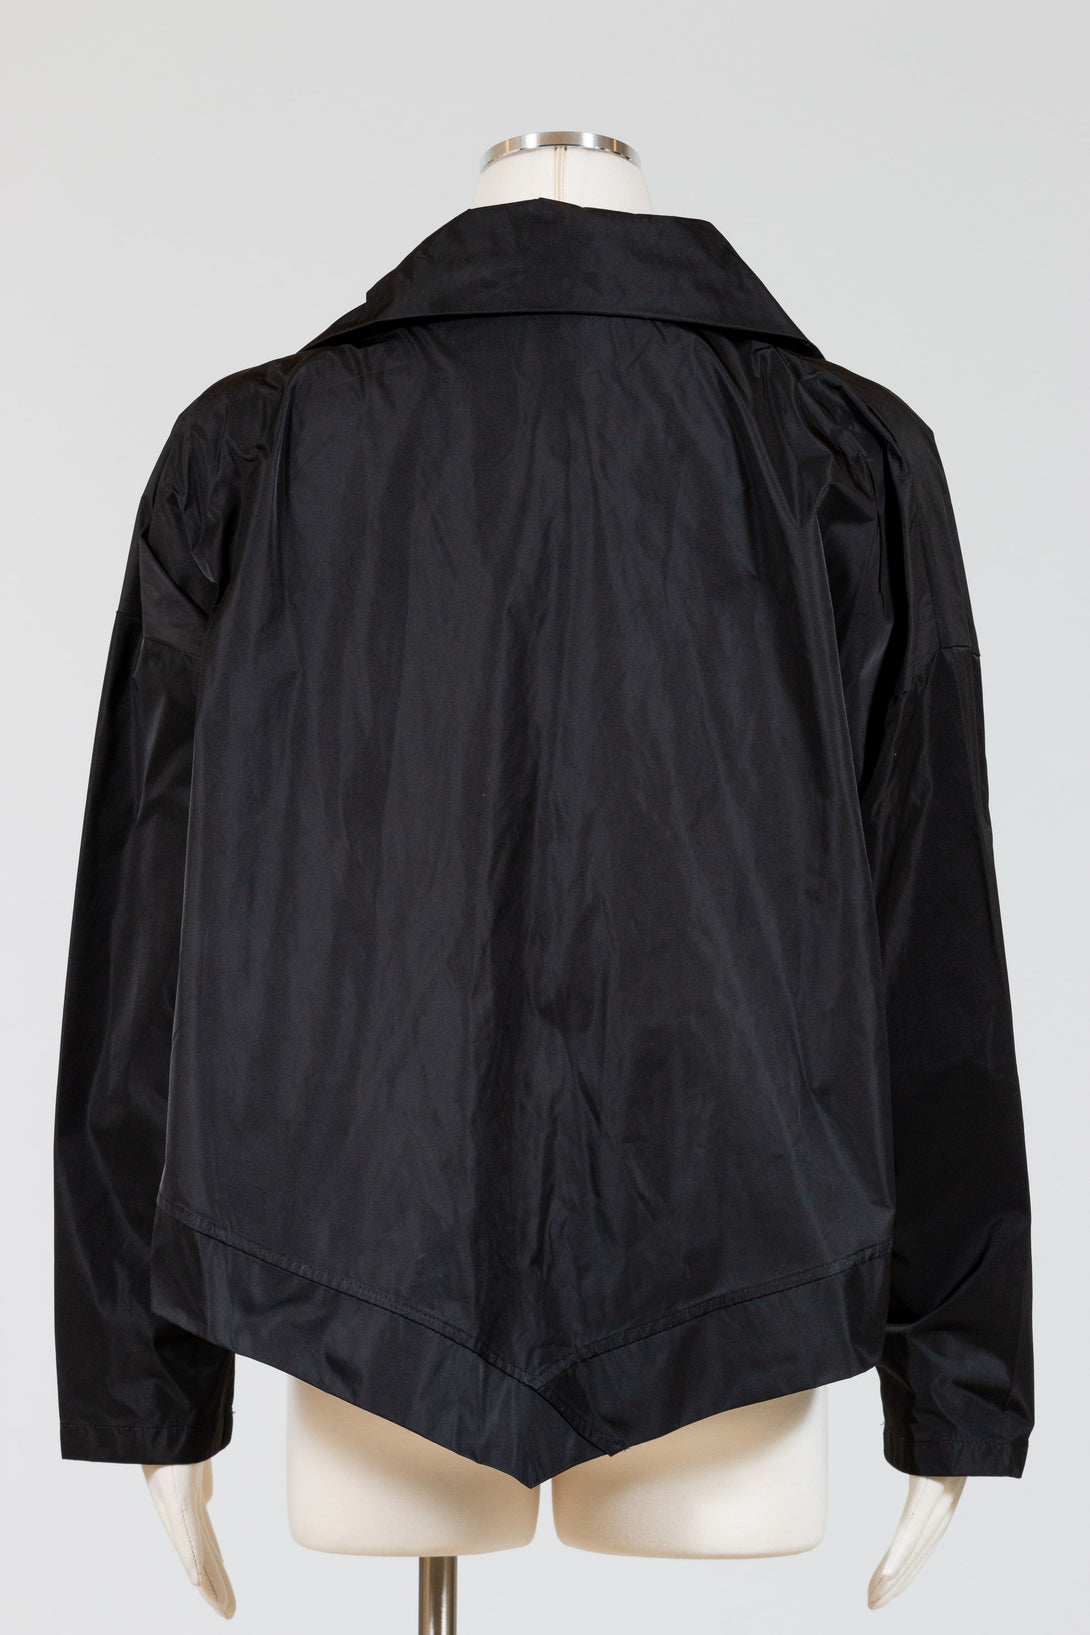 PLANET&nbsp;by Lauren G's Cropped Asymmetrical Jacket